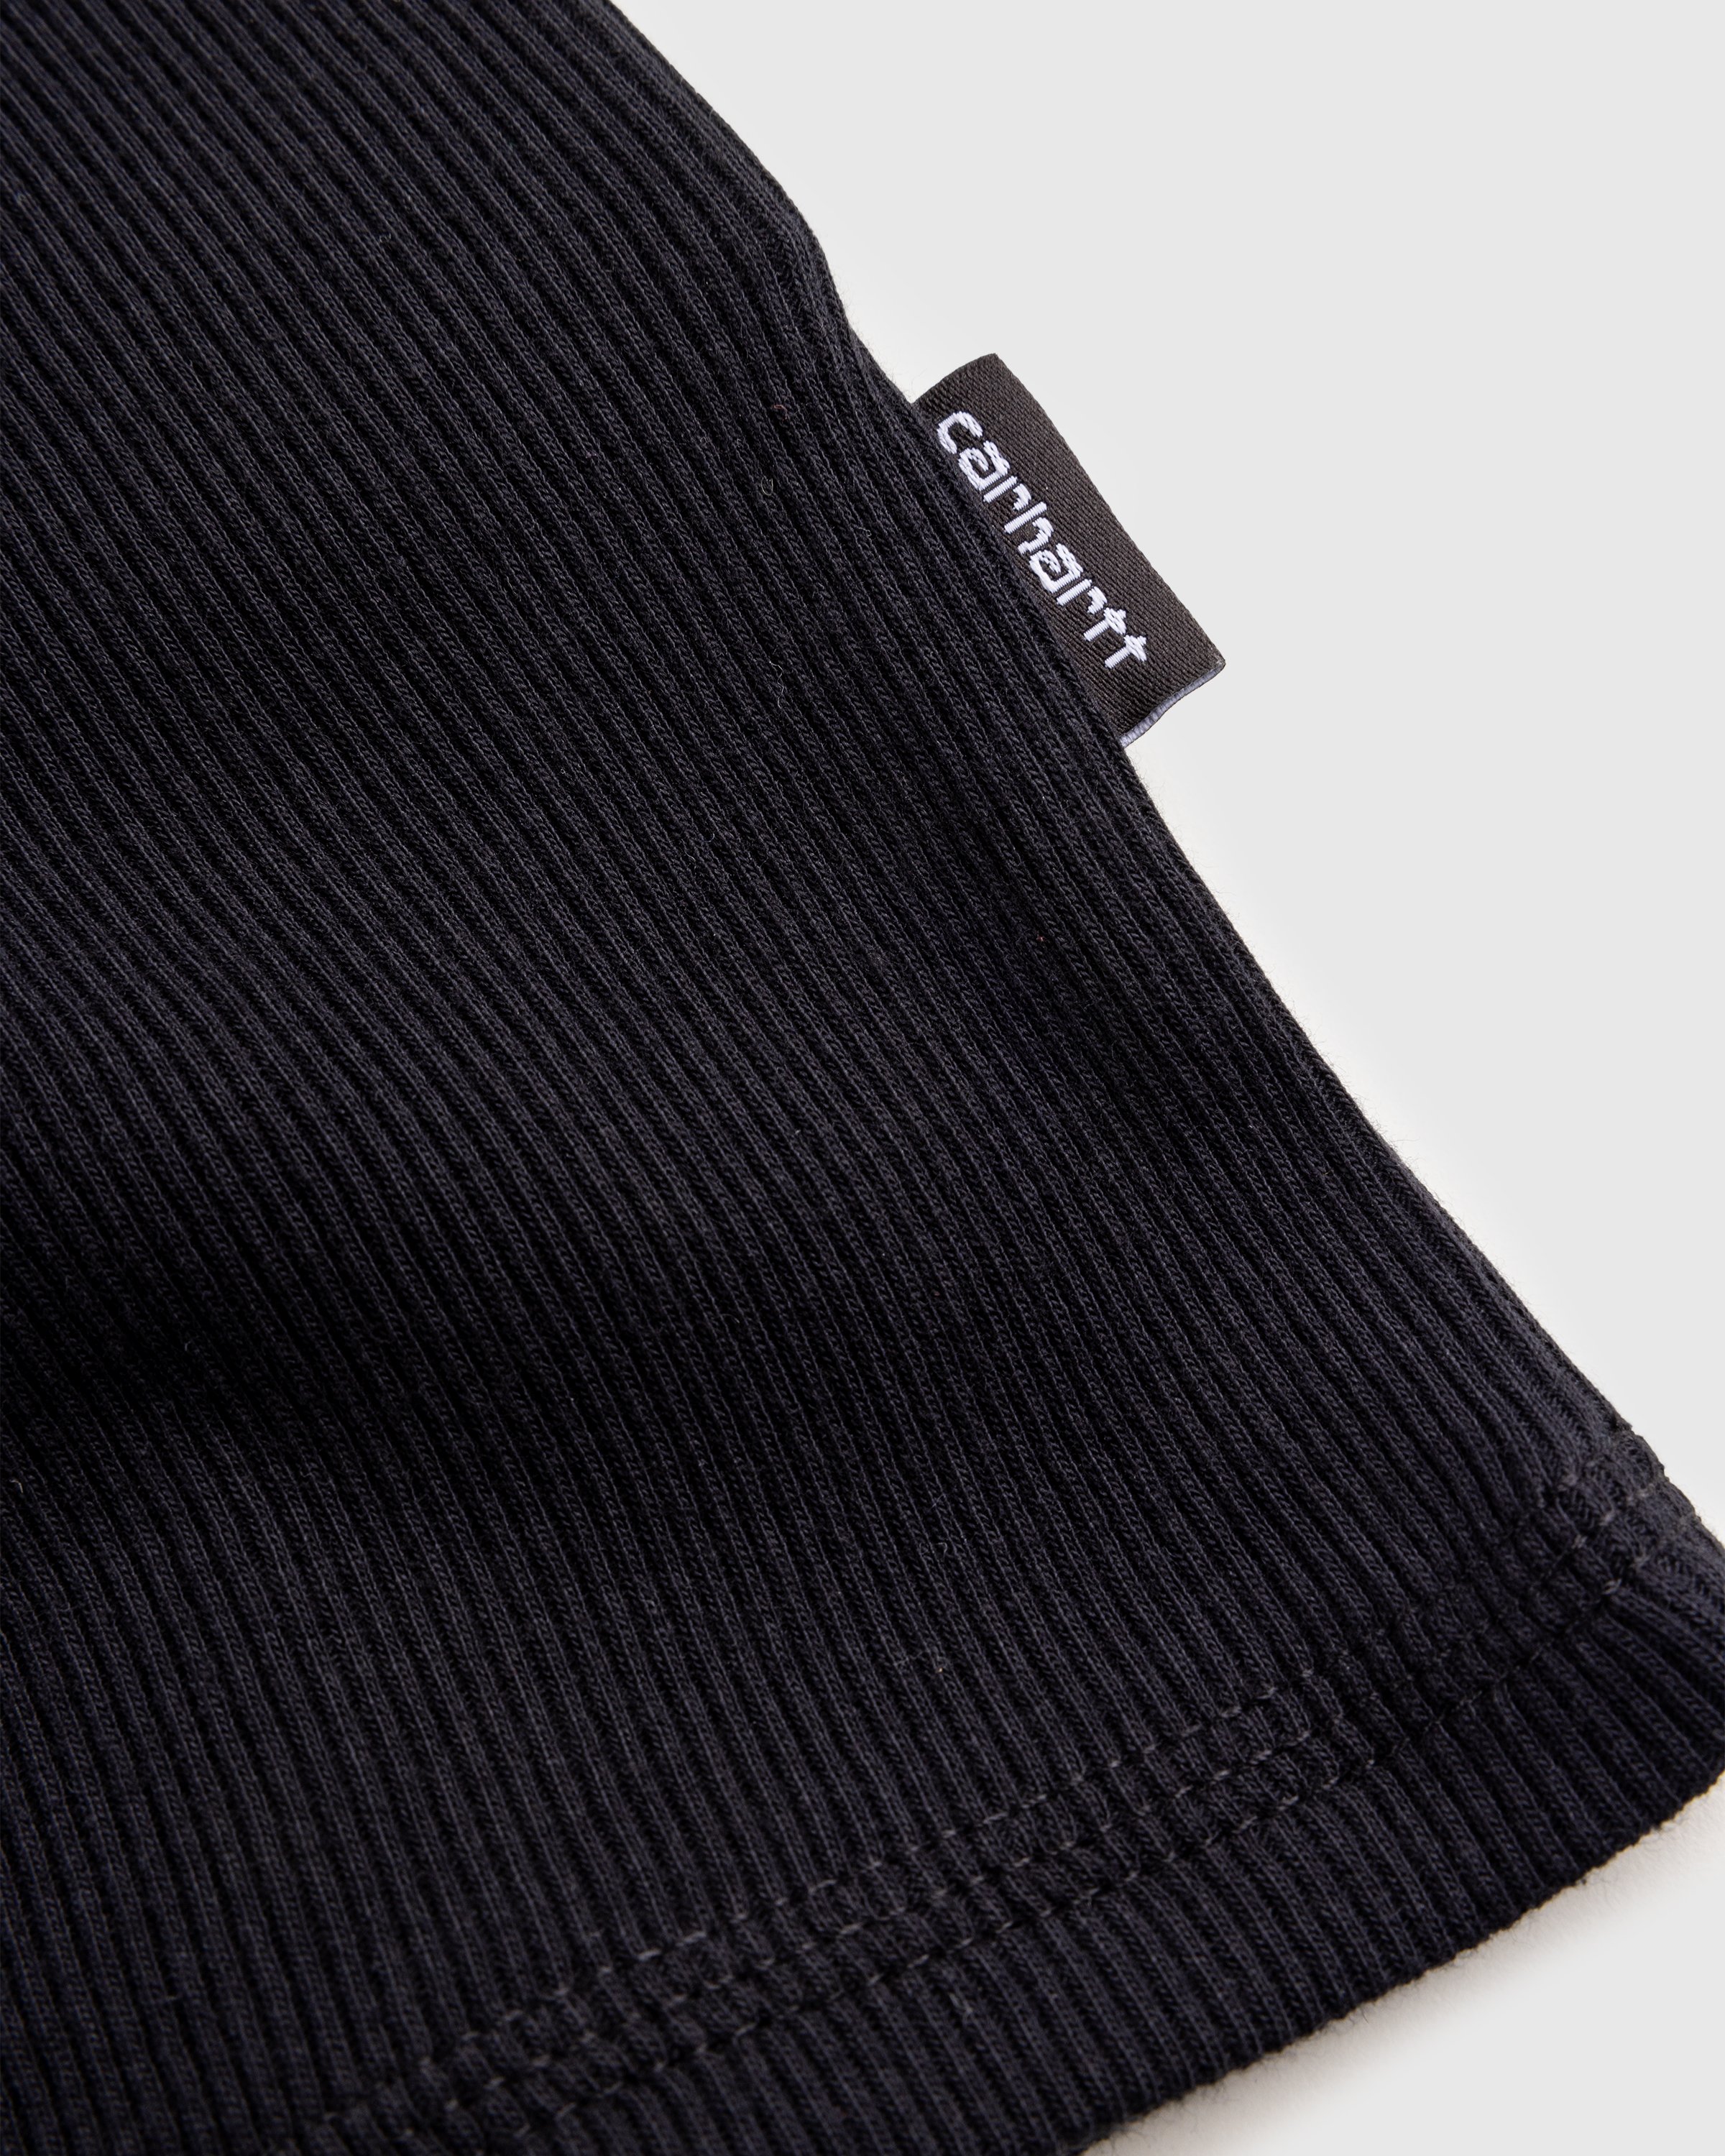 Carhartt WIP - AShirt Black + Black - Clothing - Black - Image 6